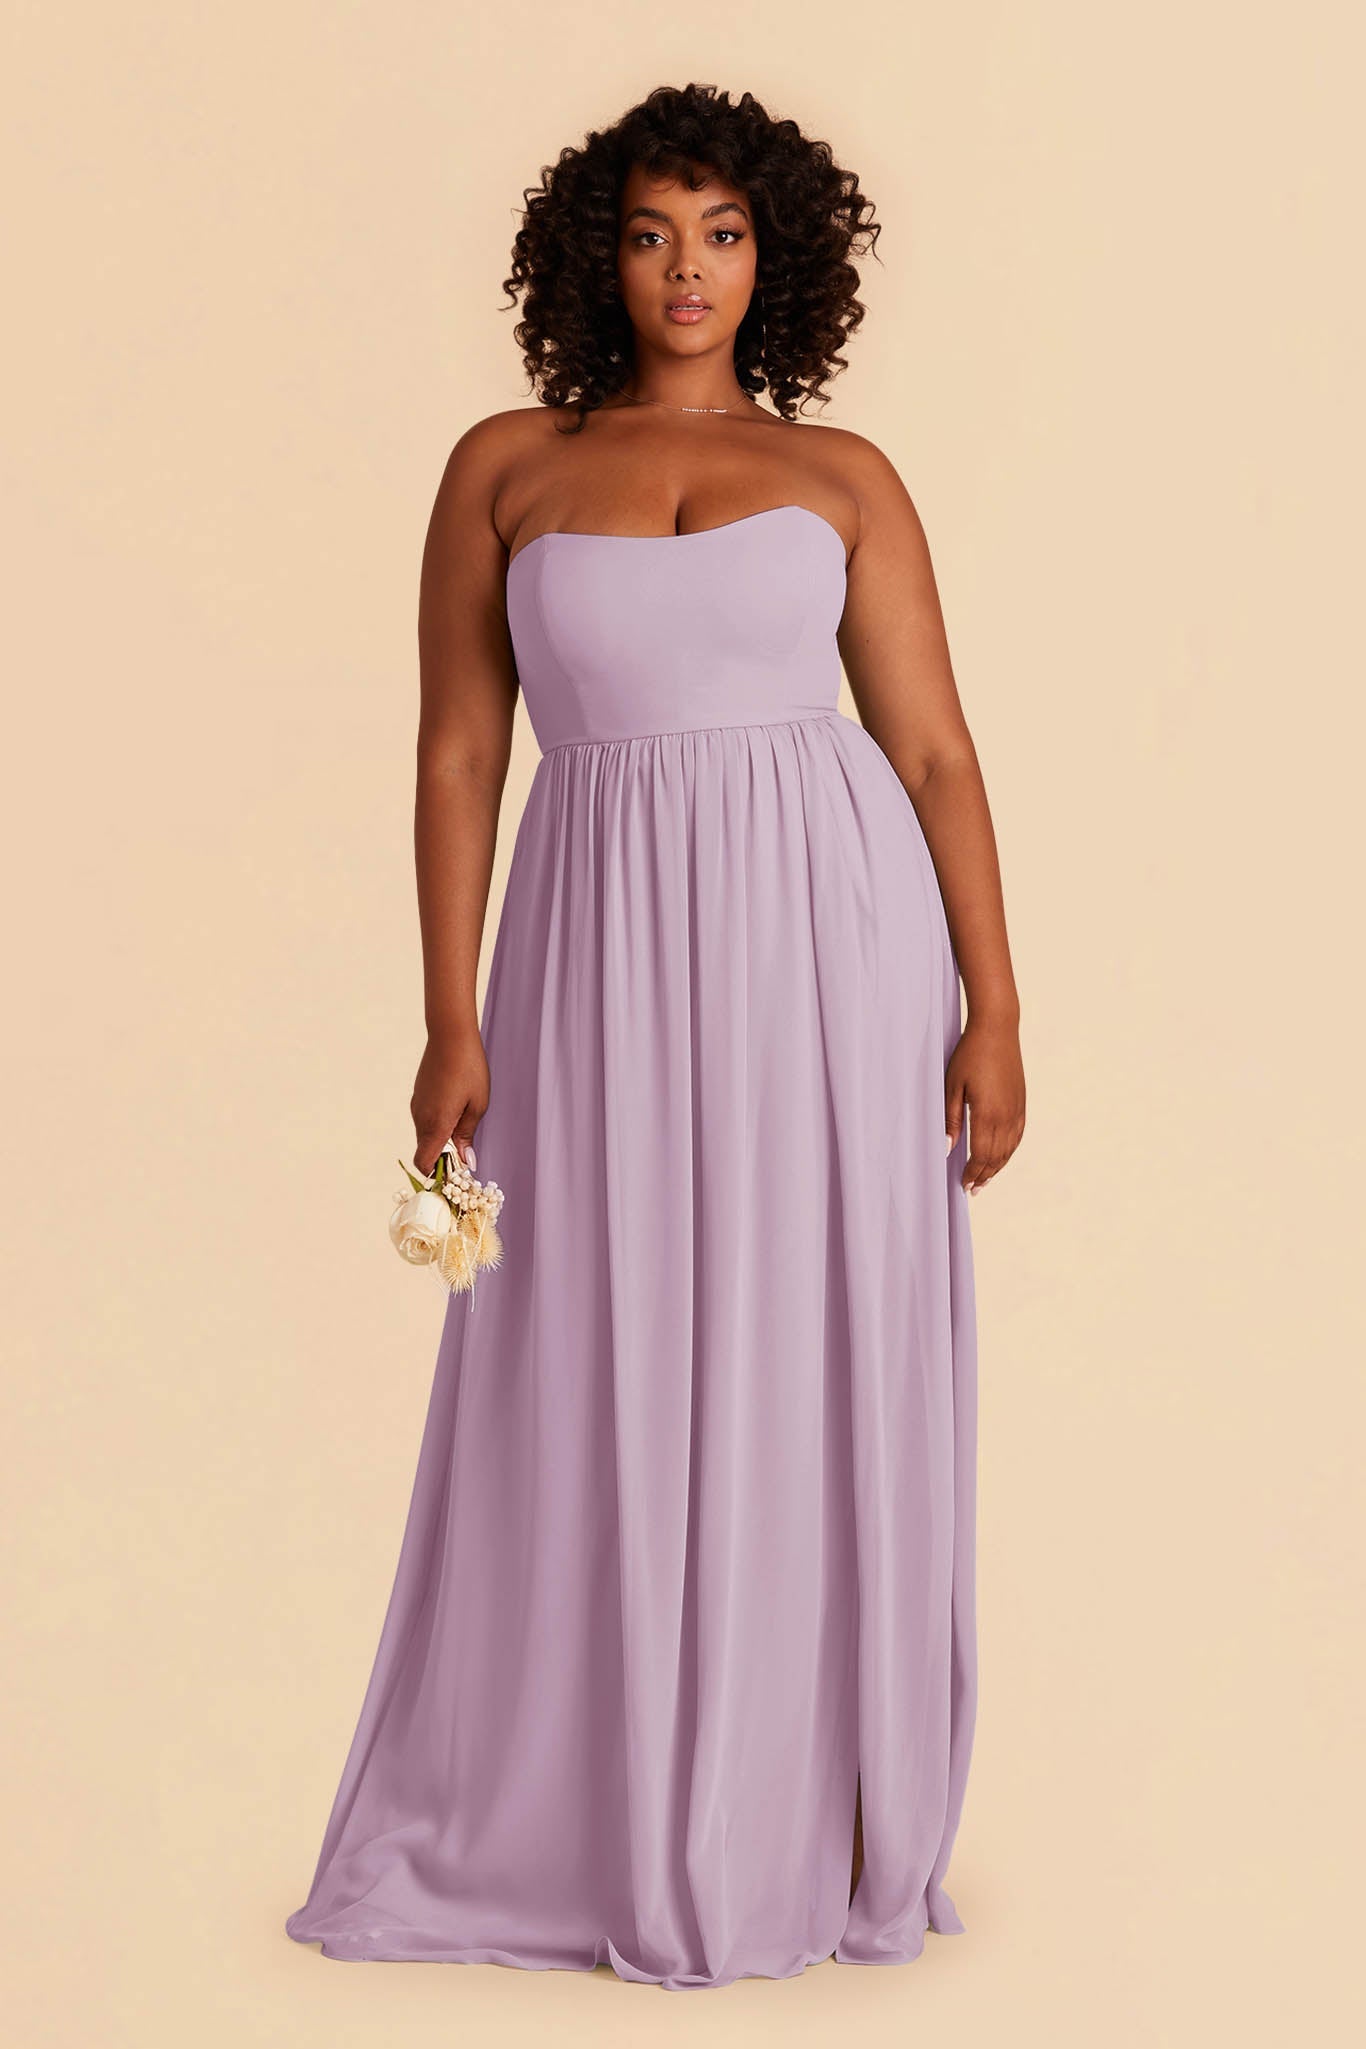 August Convertible Dress - Lavender